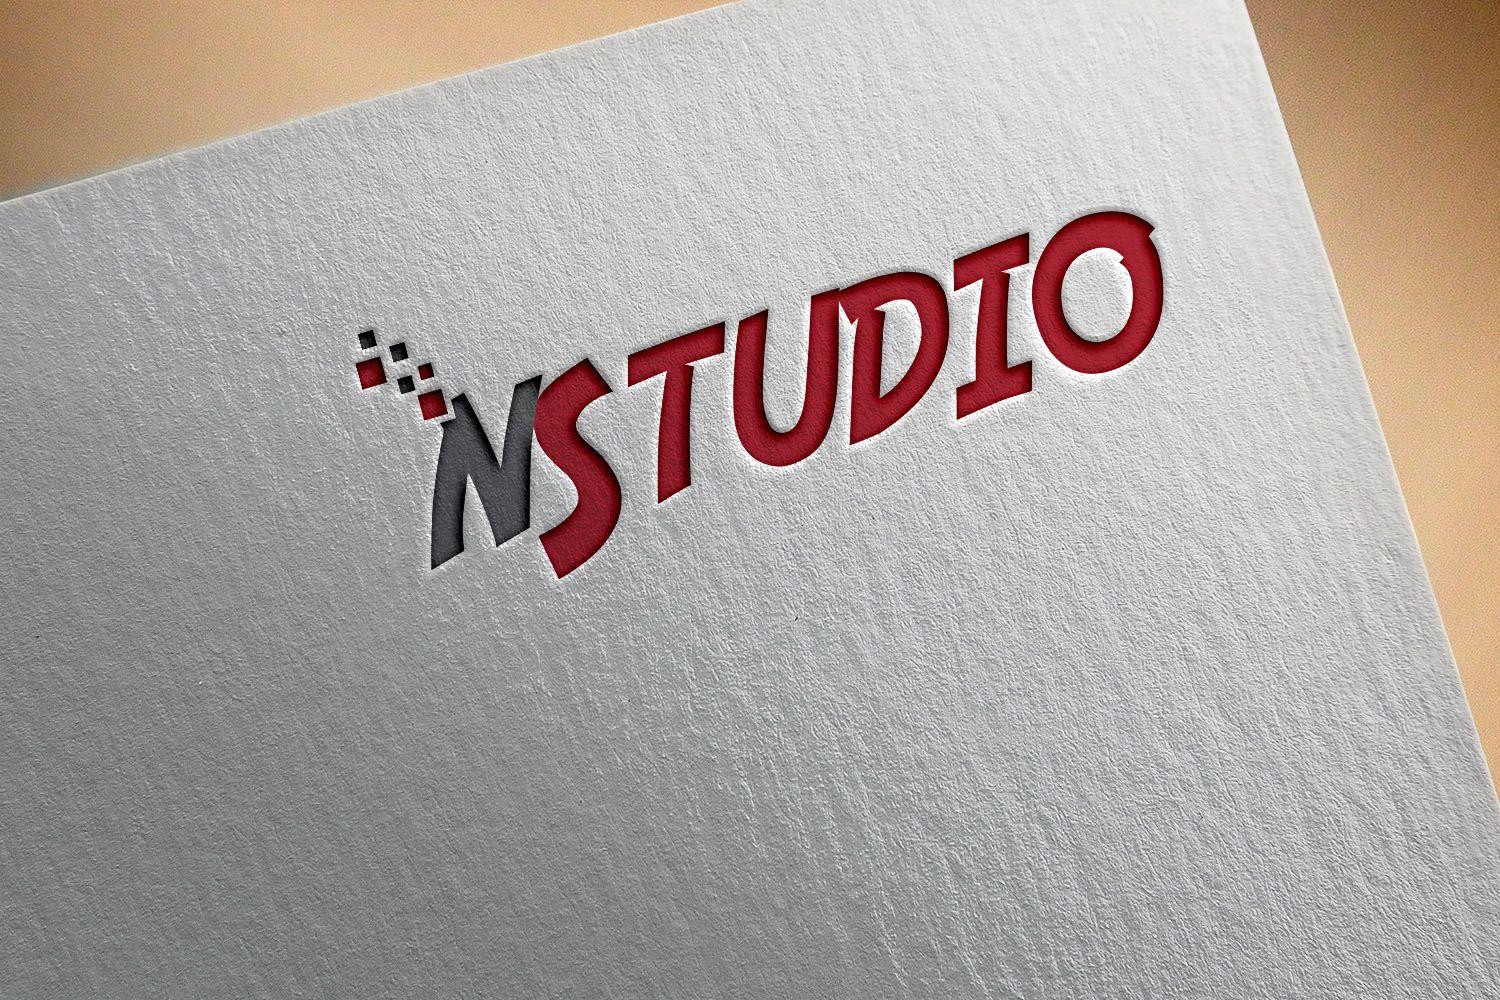 Famous Tech Logo - Elegant, Playful, Tech Logo Design for nStudio by Famous Designer ...